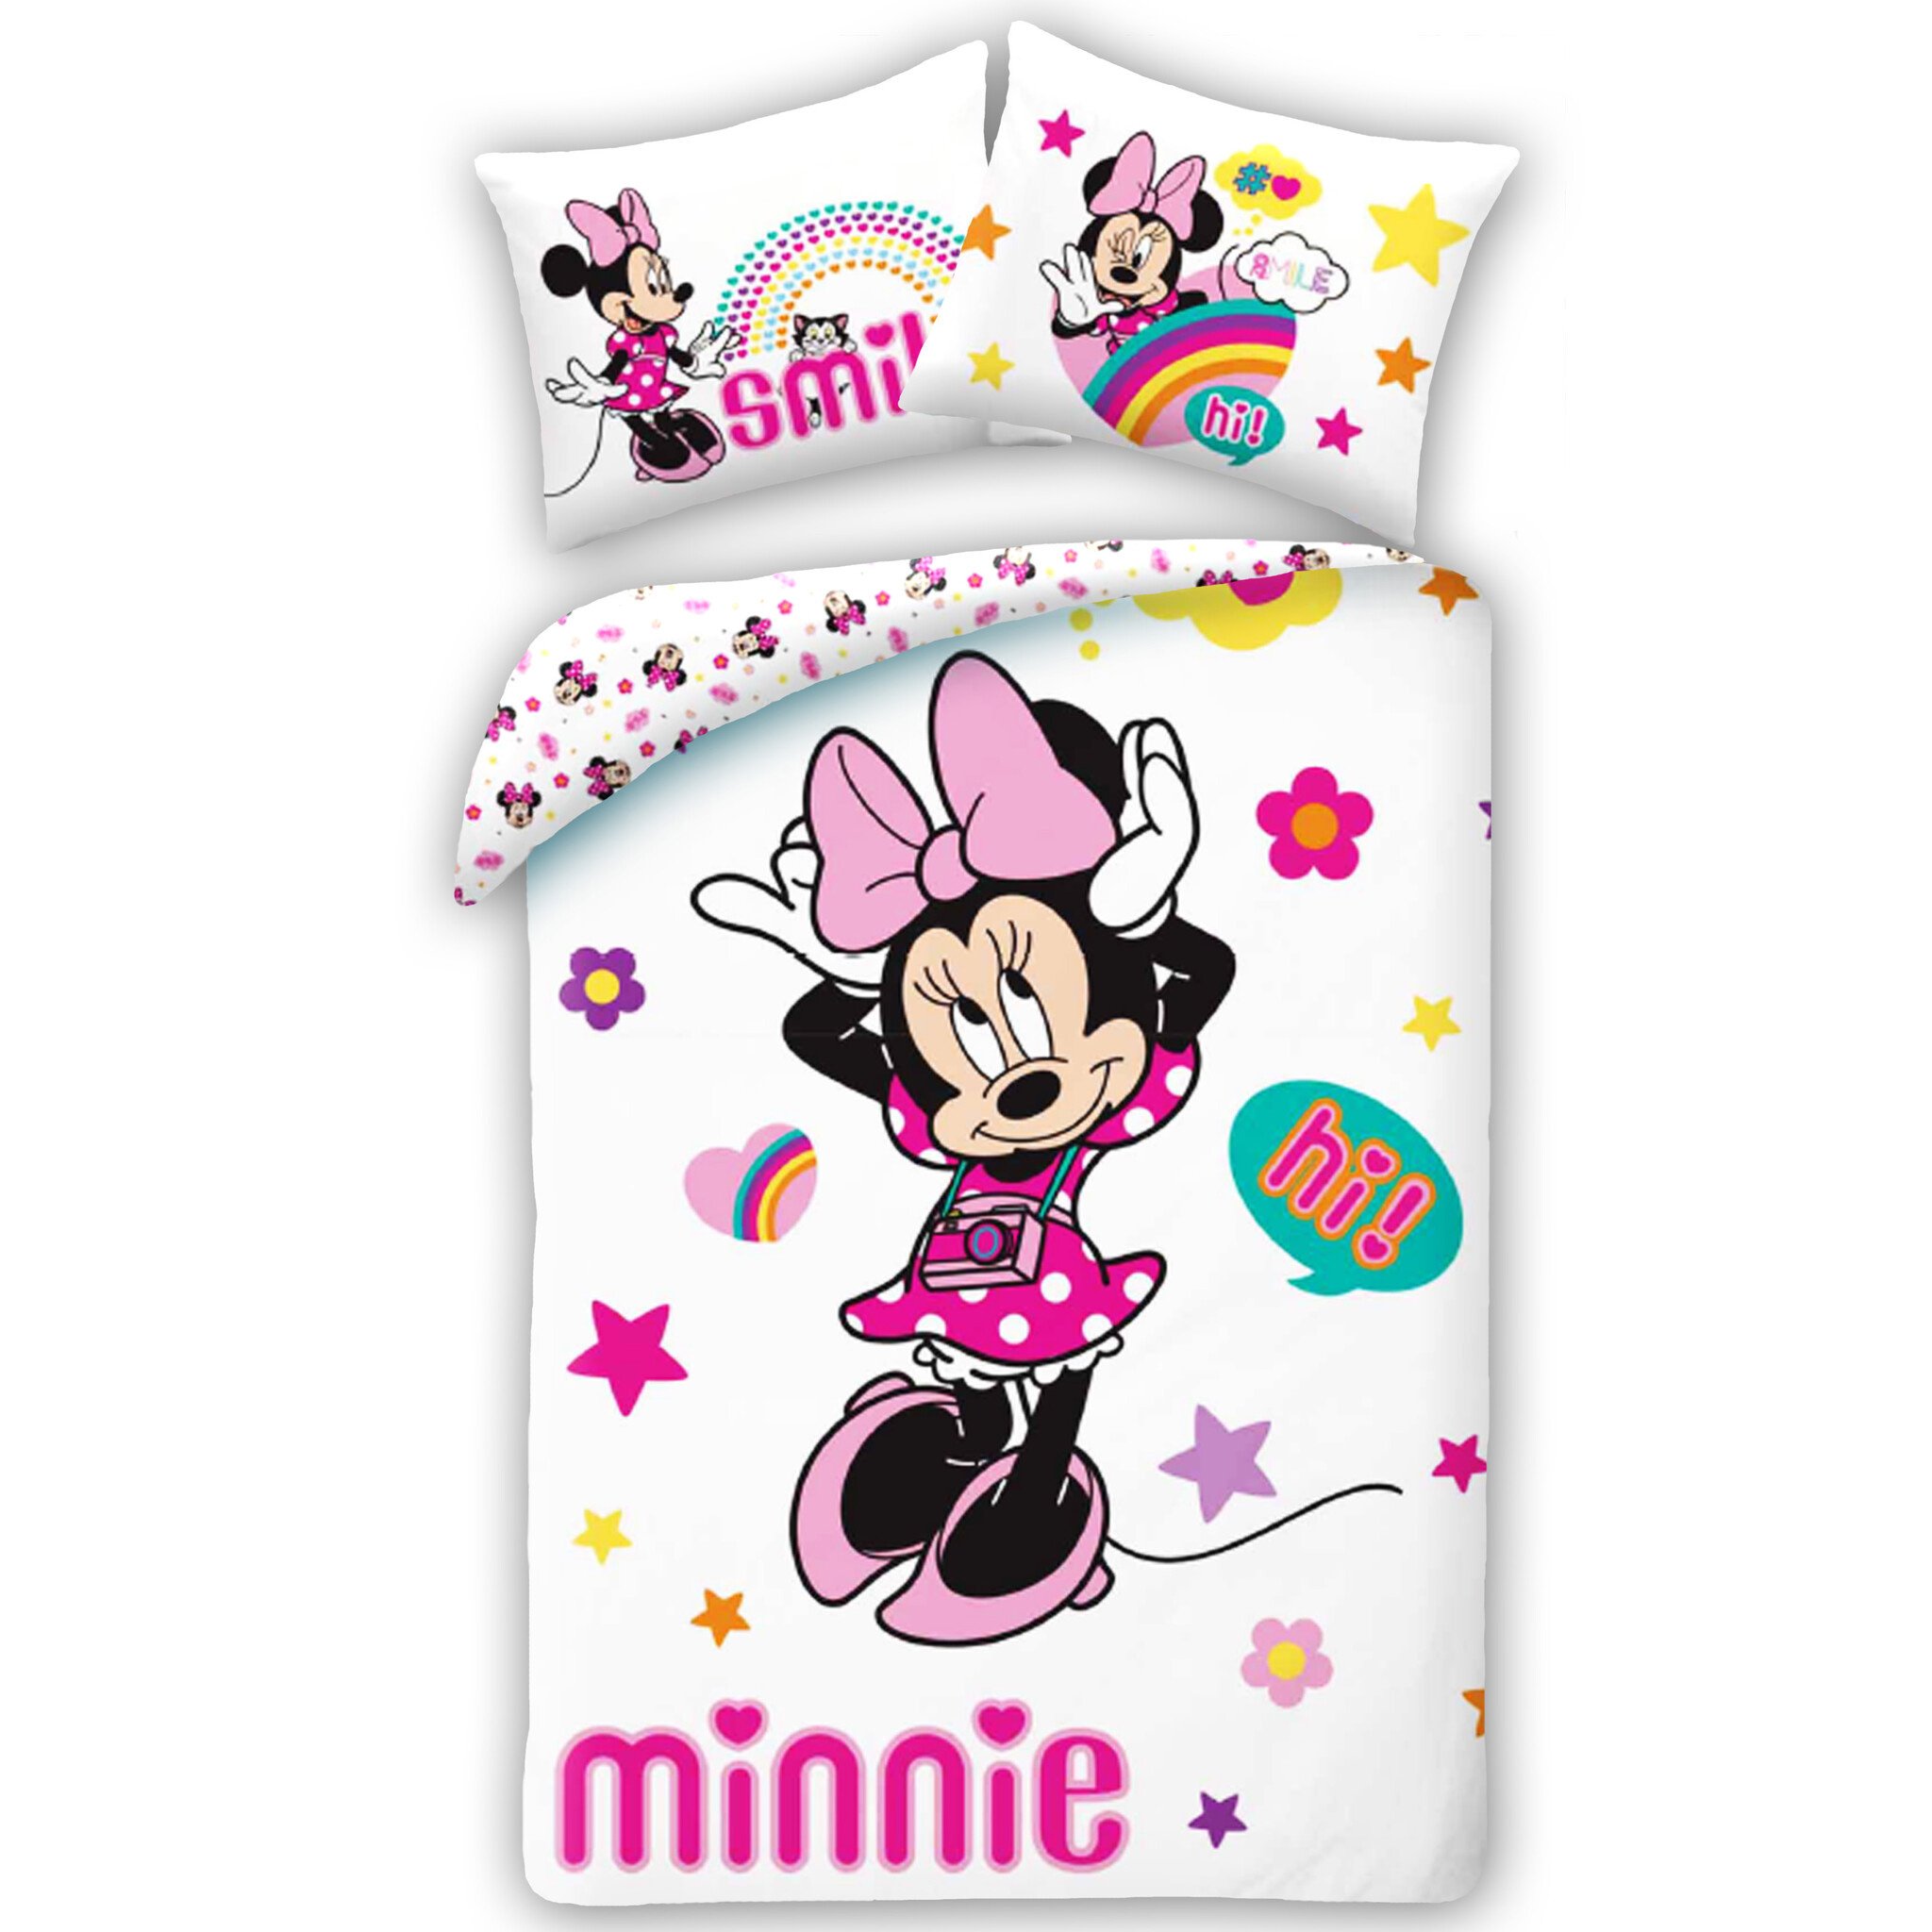 Roze Minnie Mouse Dekbedovertrek- 140 x 200 cm - Katoen - 70 x 90 cm pre order